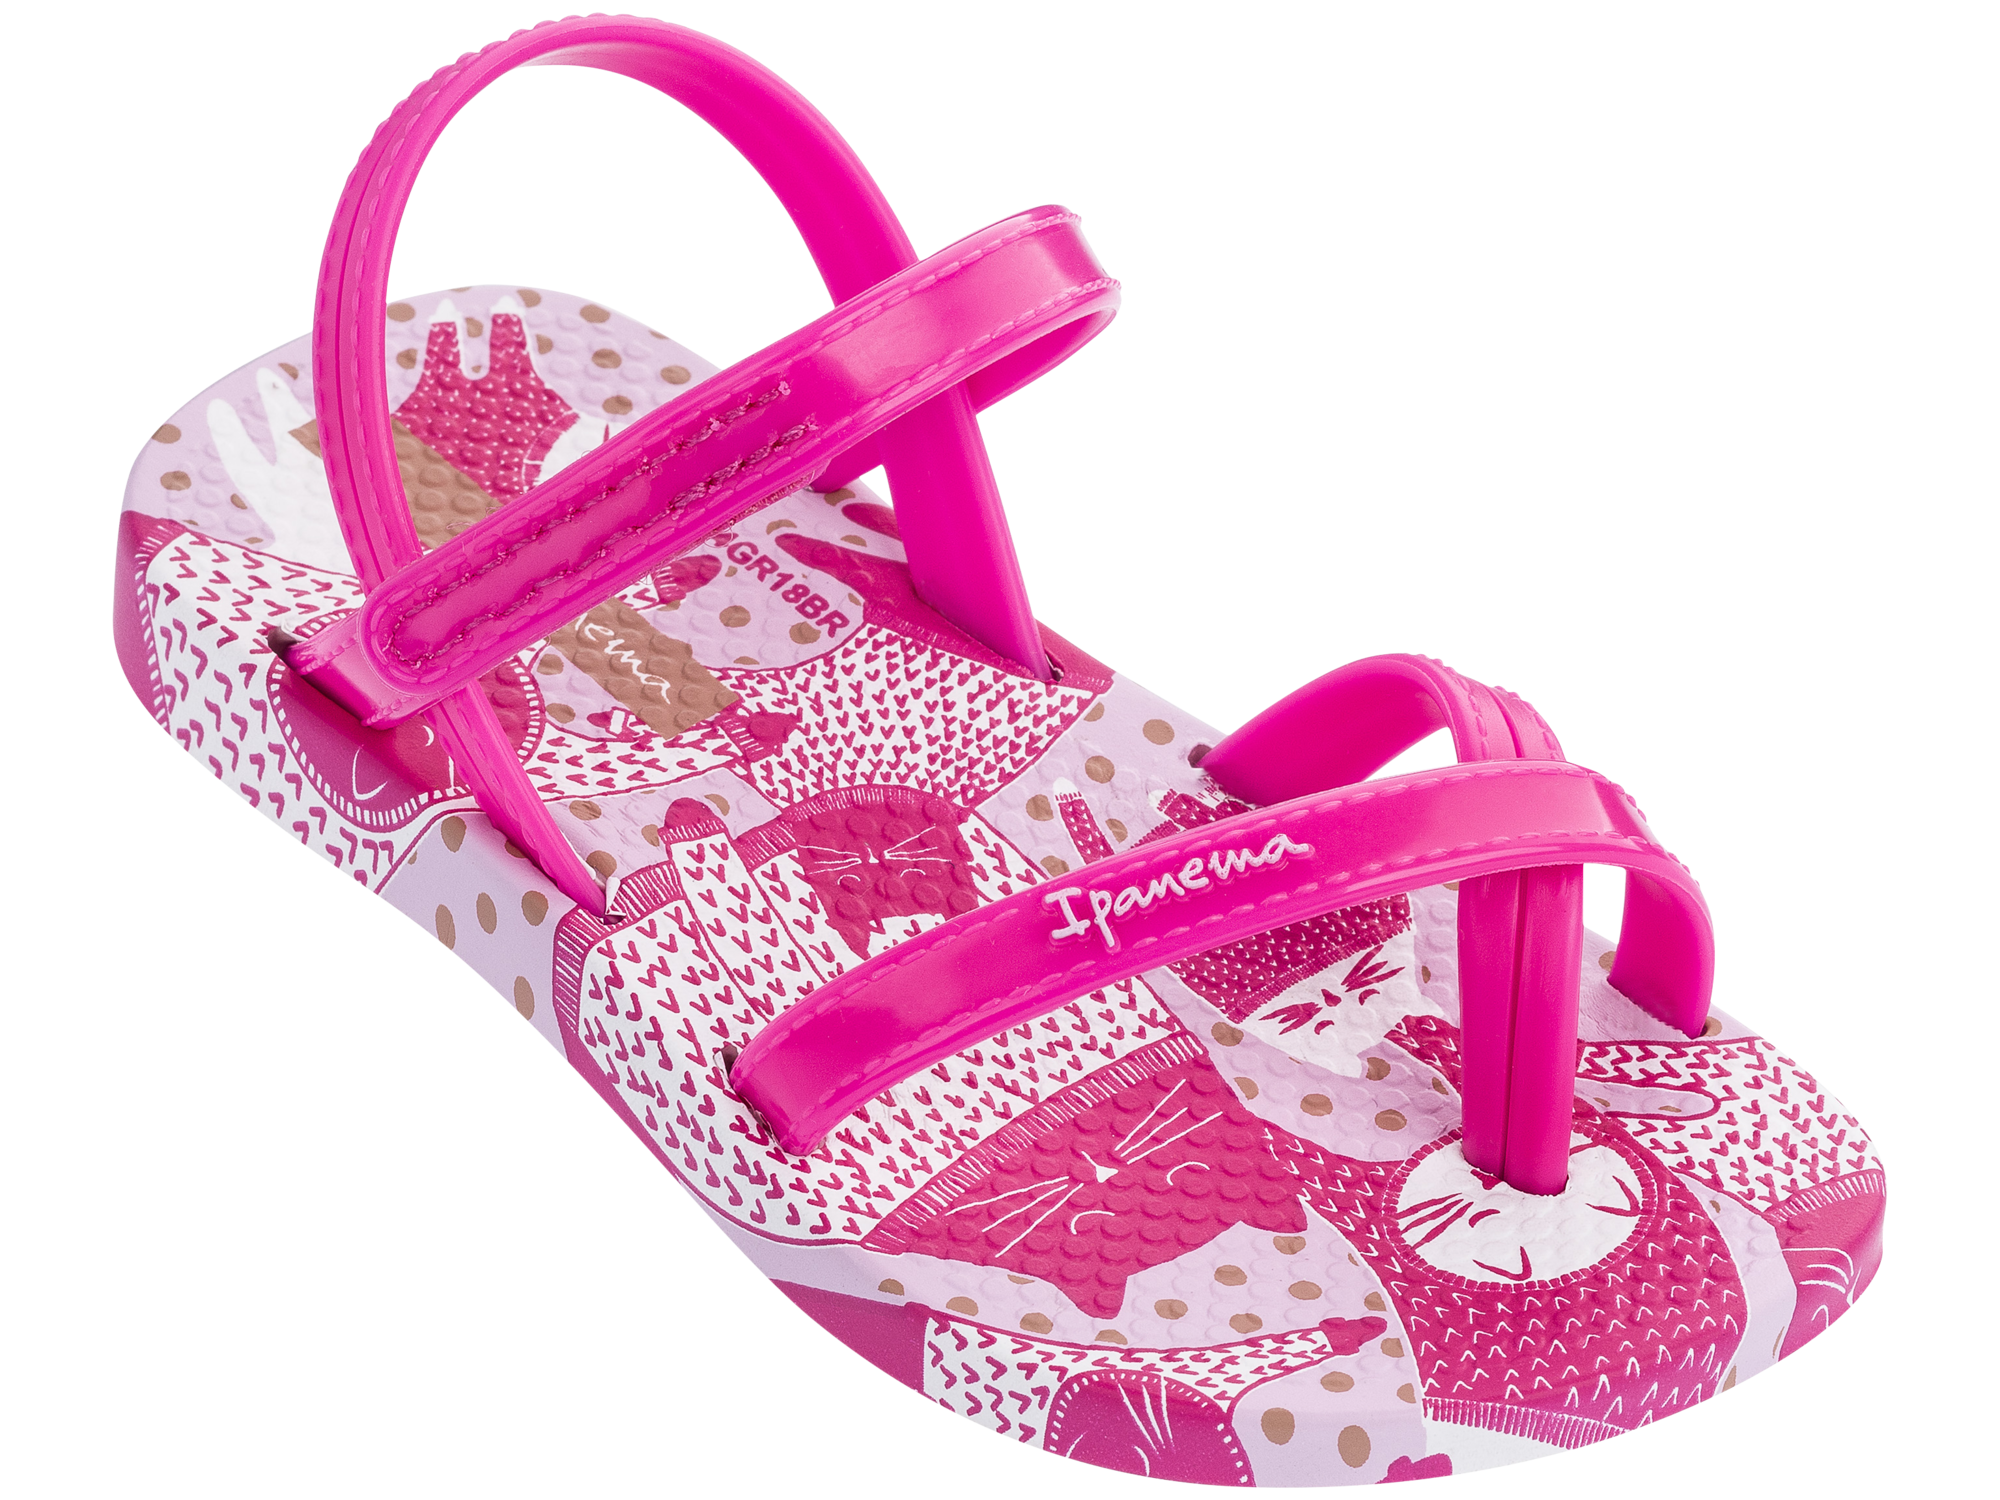 Demon strijd kam Ipanema Fashion Sandal Baby Lilac pink sandaaltje | Slippery.nl - Dé online  slipperwinkel!